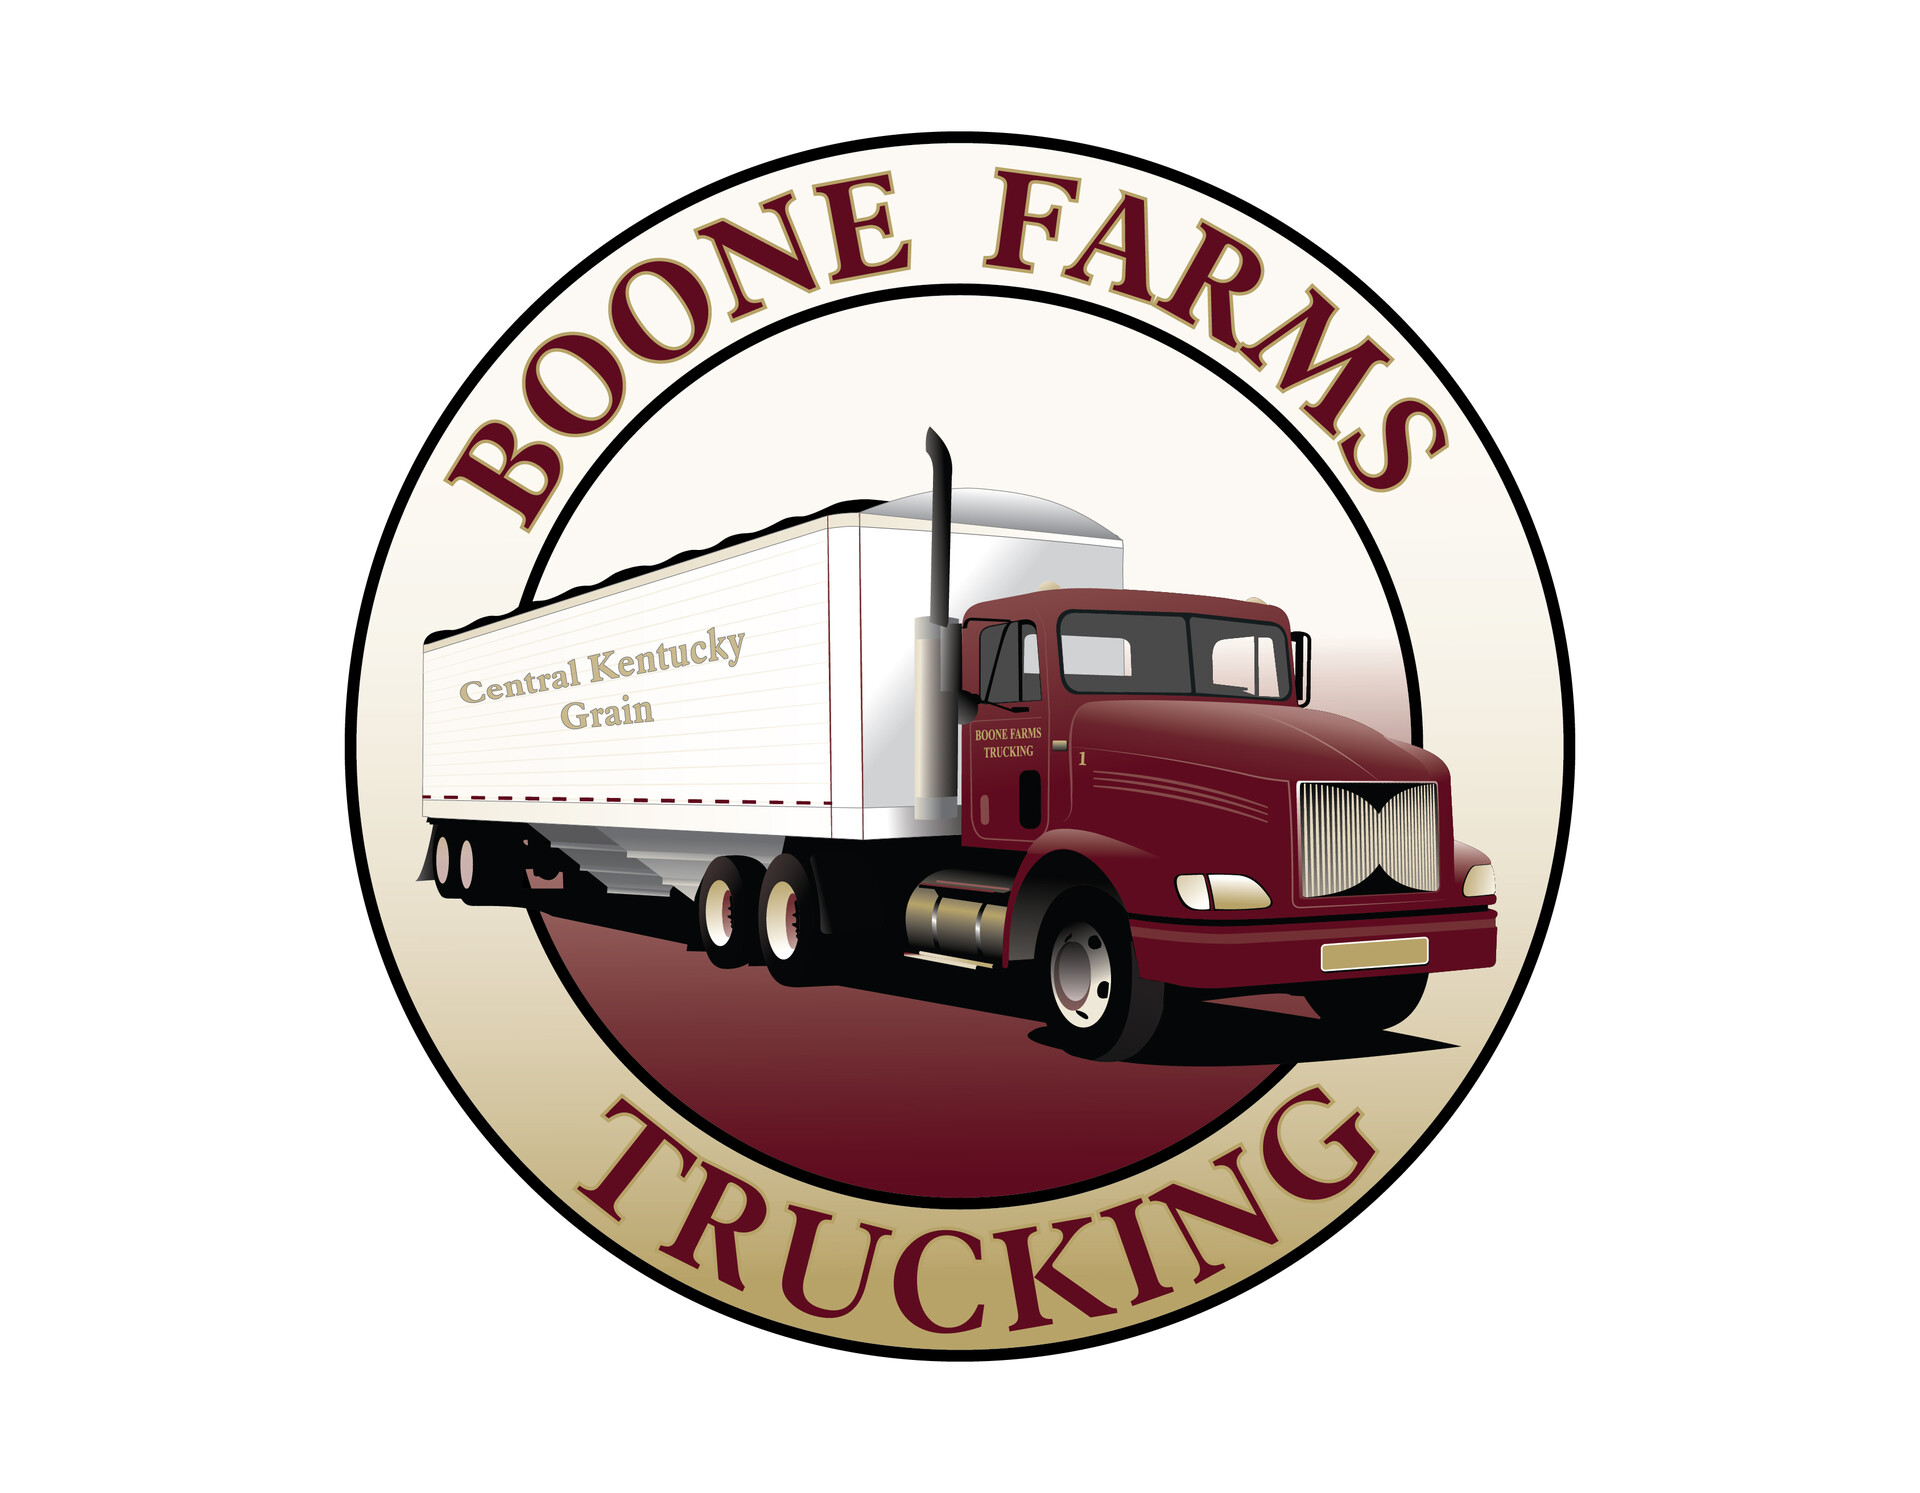 ArtStation - Boone Farms Trucking Logo